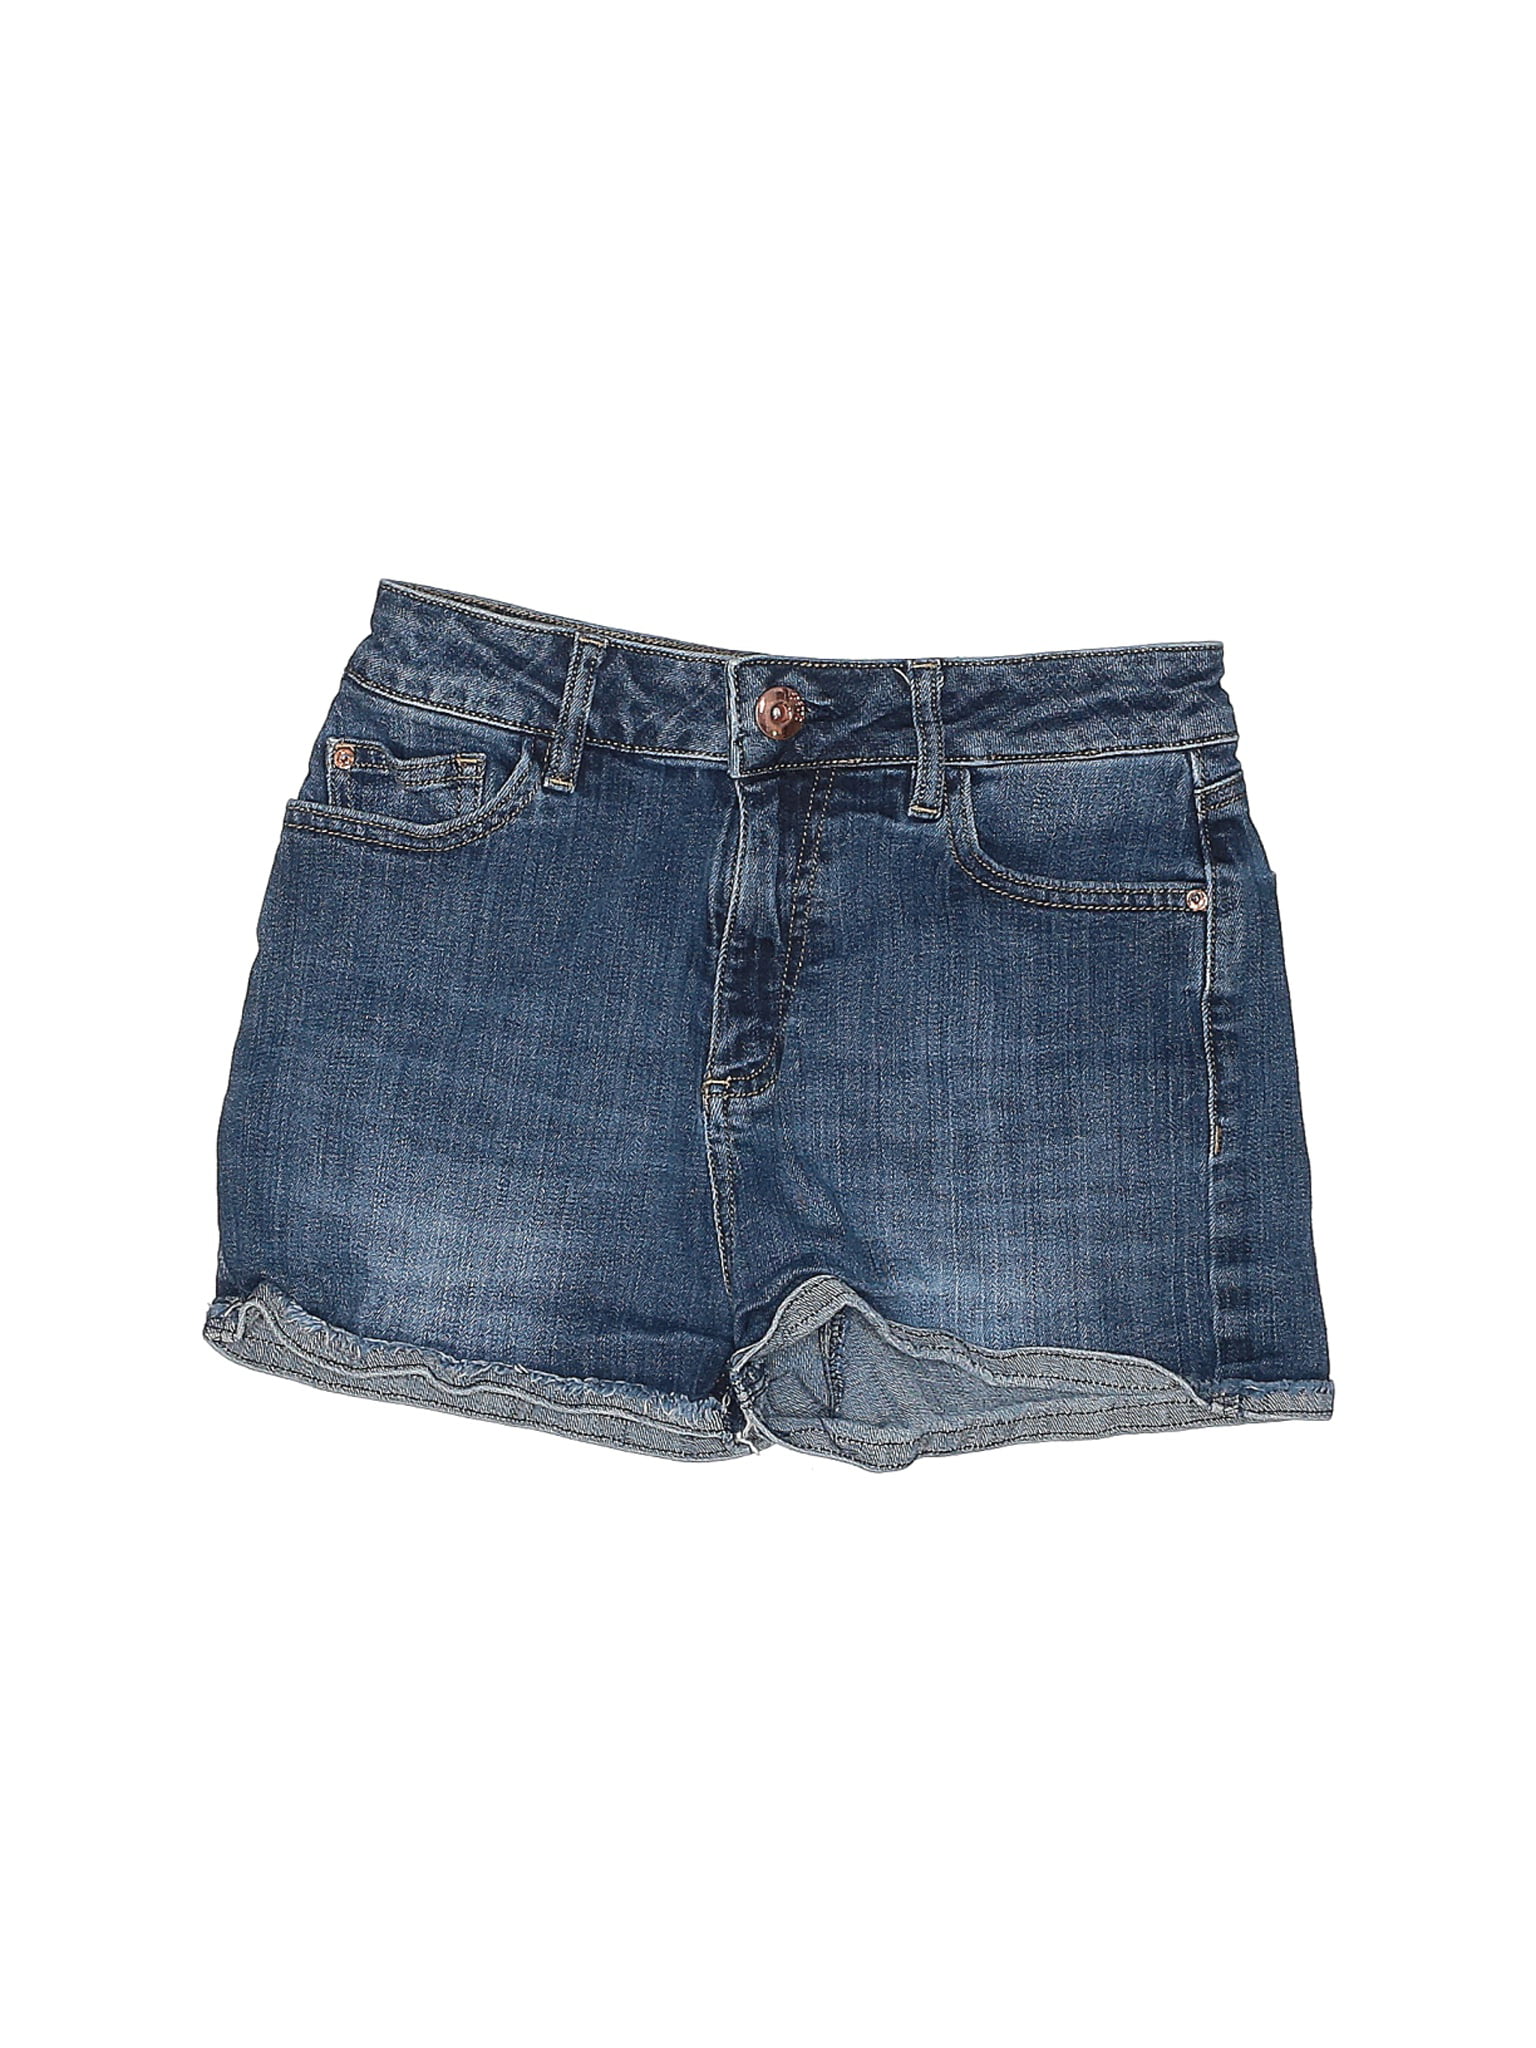 DL1961 - Pre-Owned DL1961 Women's Size 24W Denim Shorts - Walmart.com ...